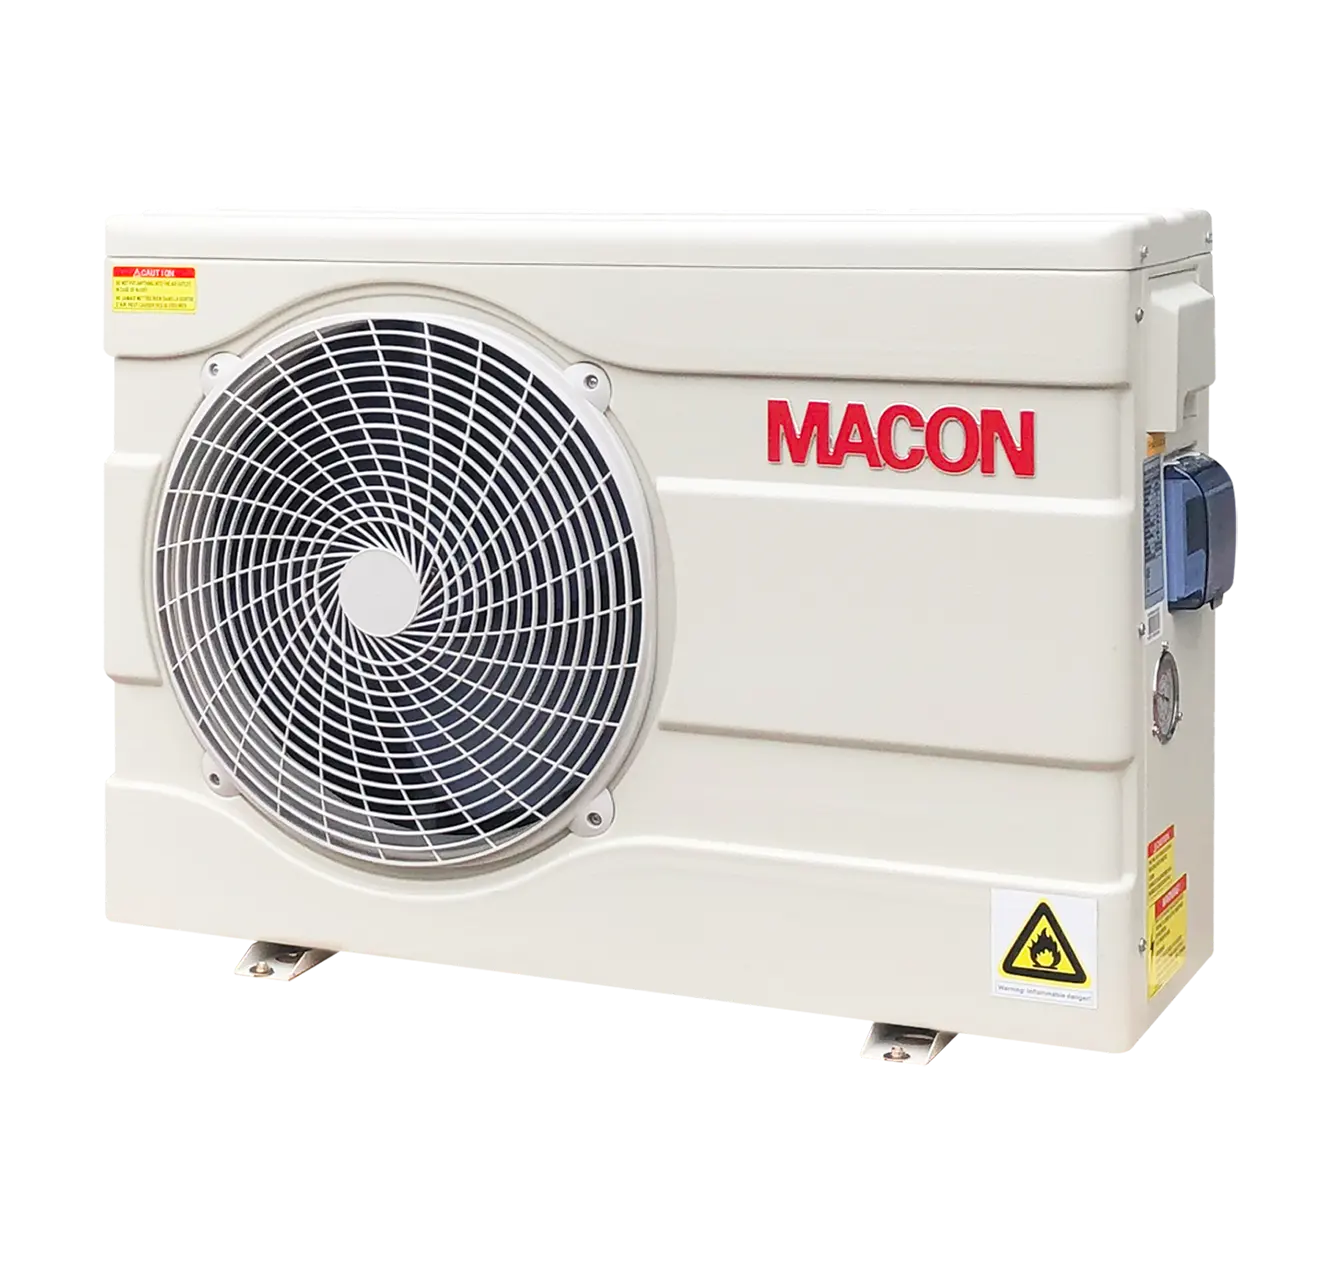 Macon renewable energy heat pump swimming pool heat pump spa heater hot spring water heater